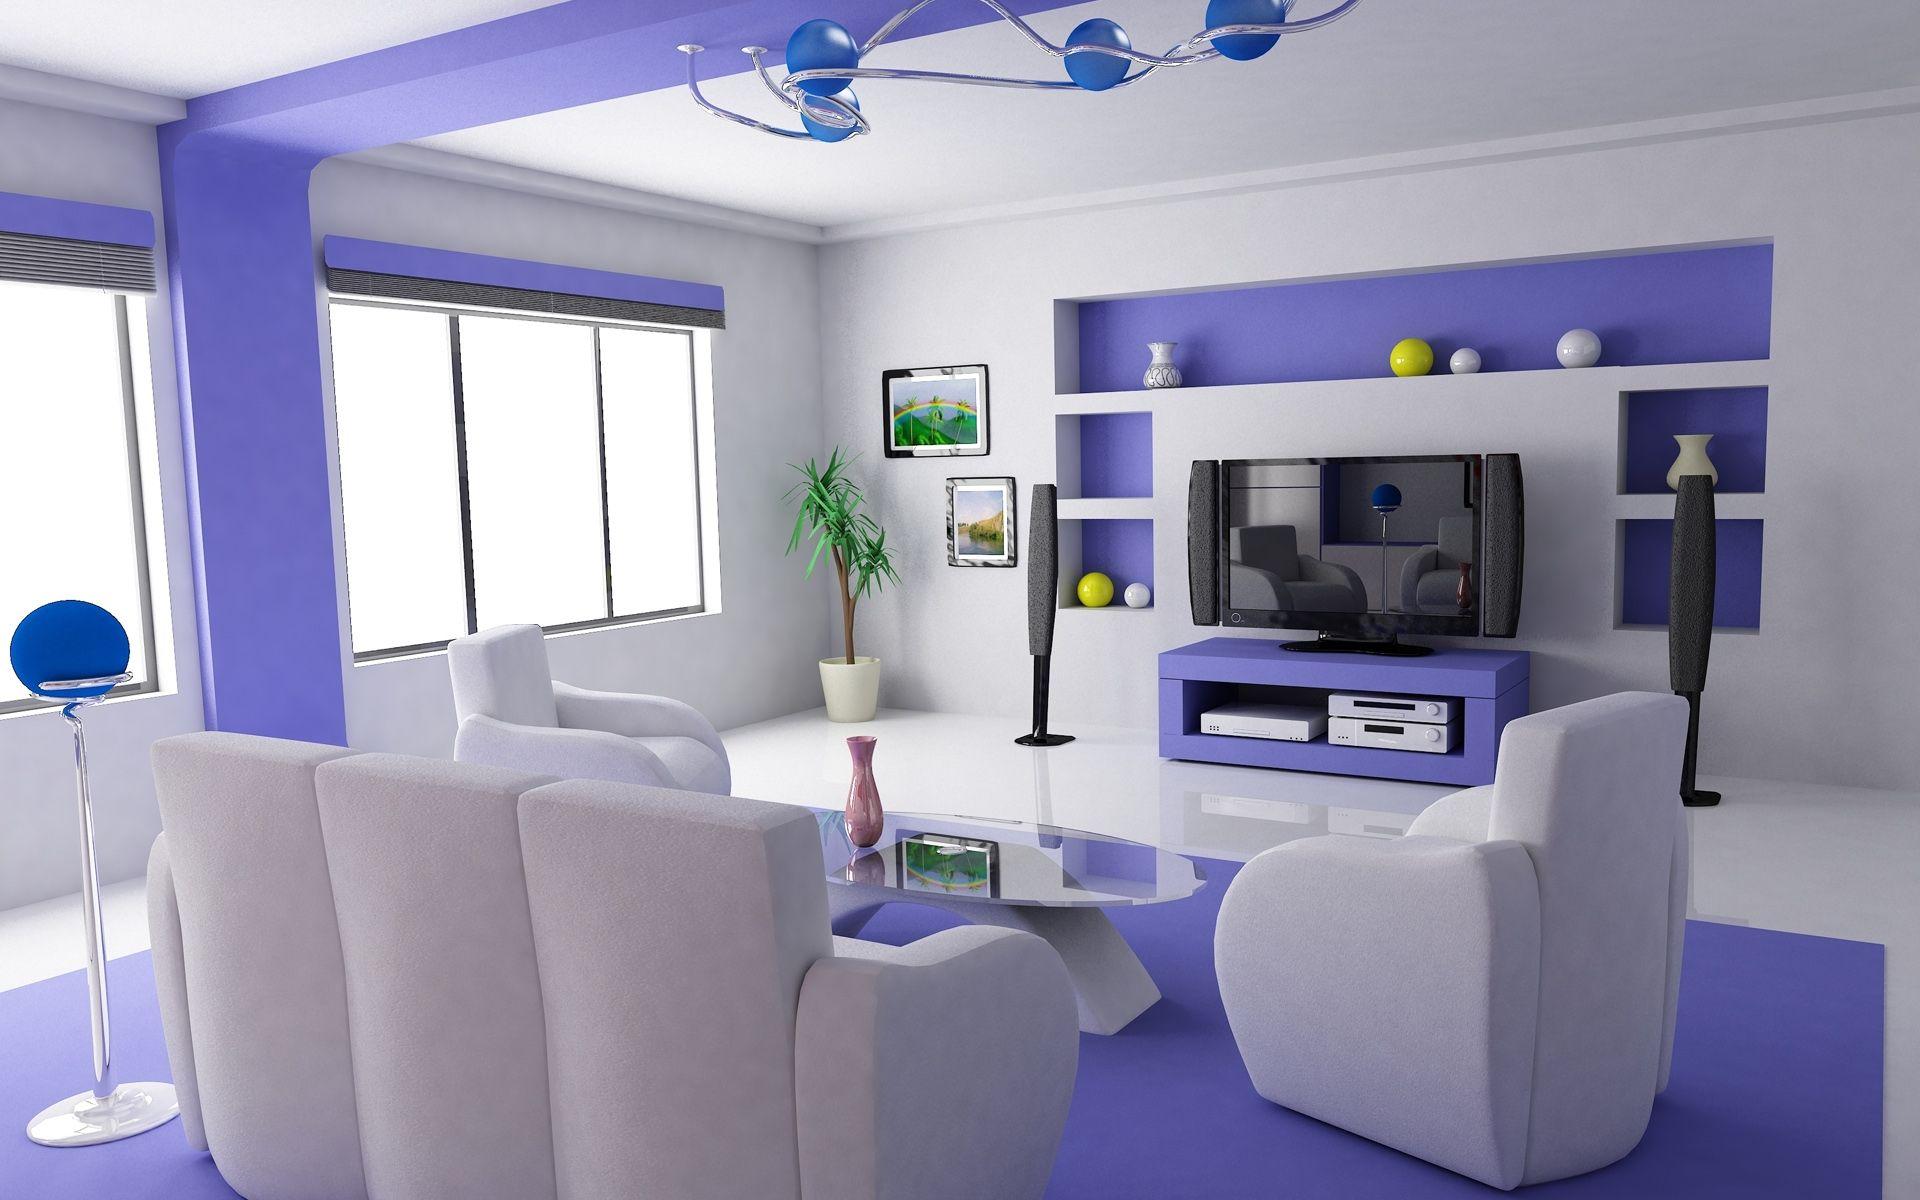 HD wallpaper for Home Interior Blue Theme. Free HD Wallpaper Desktop